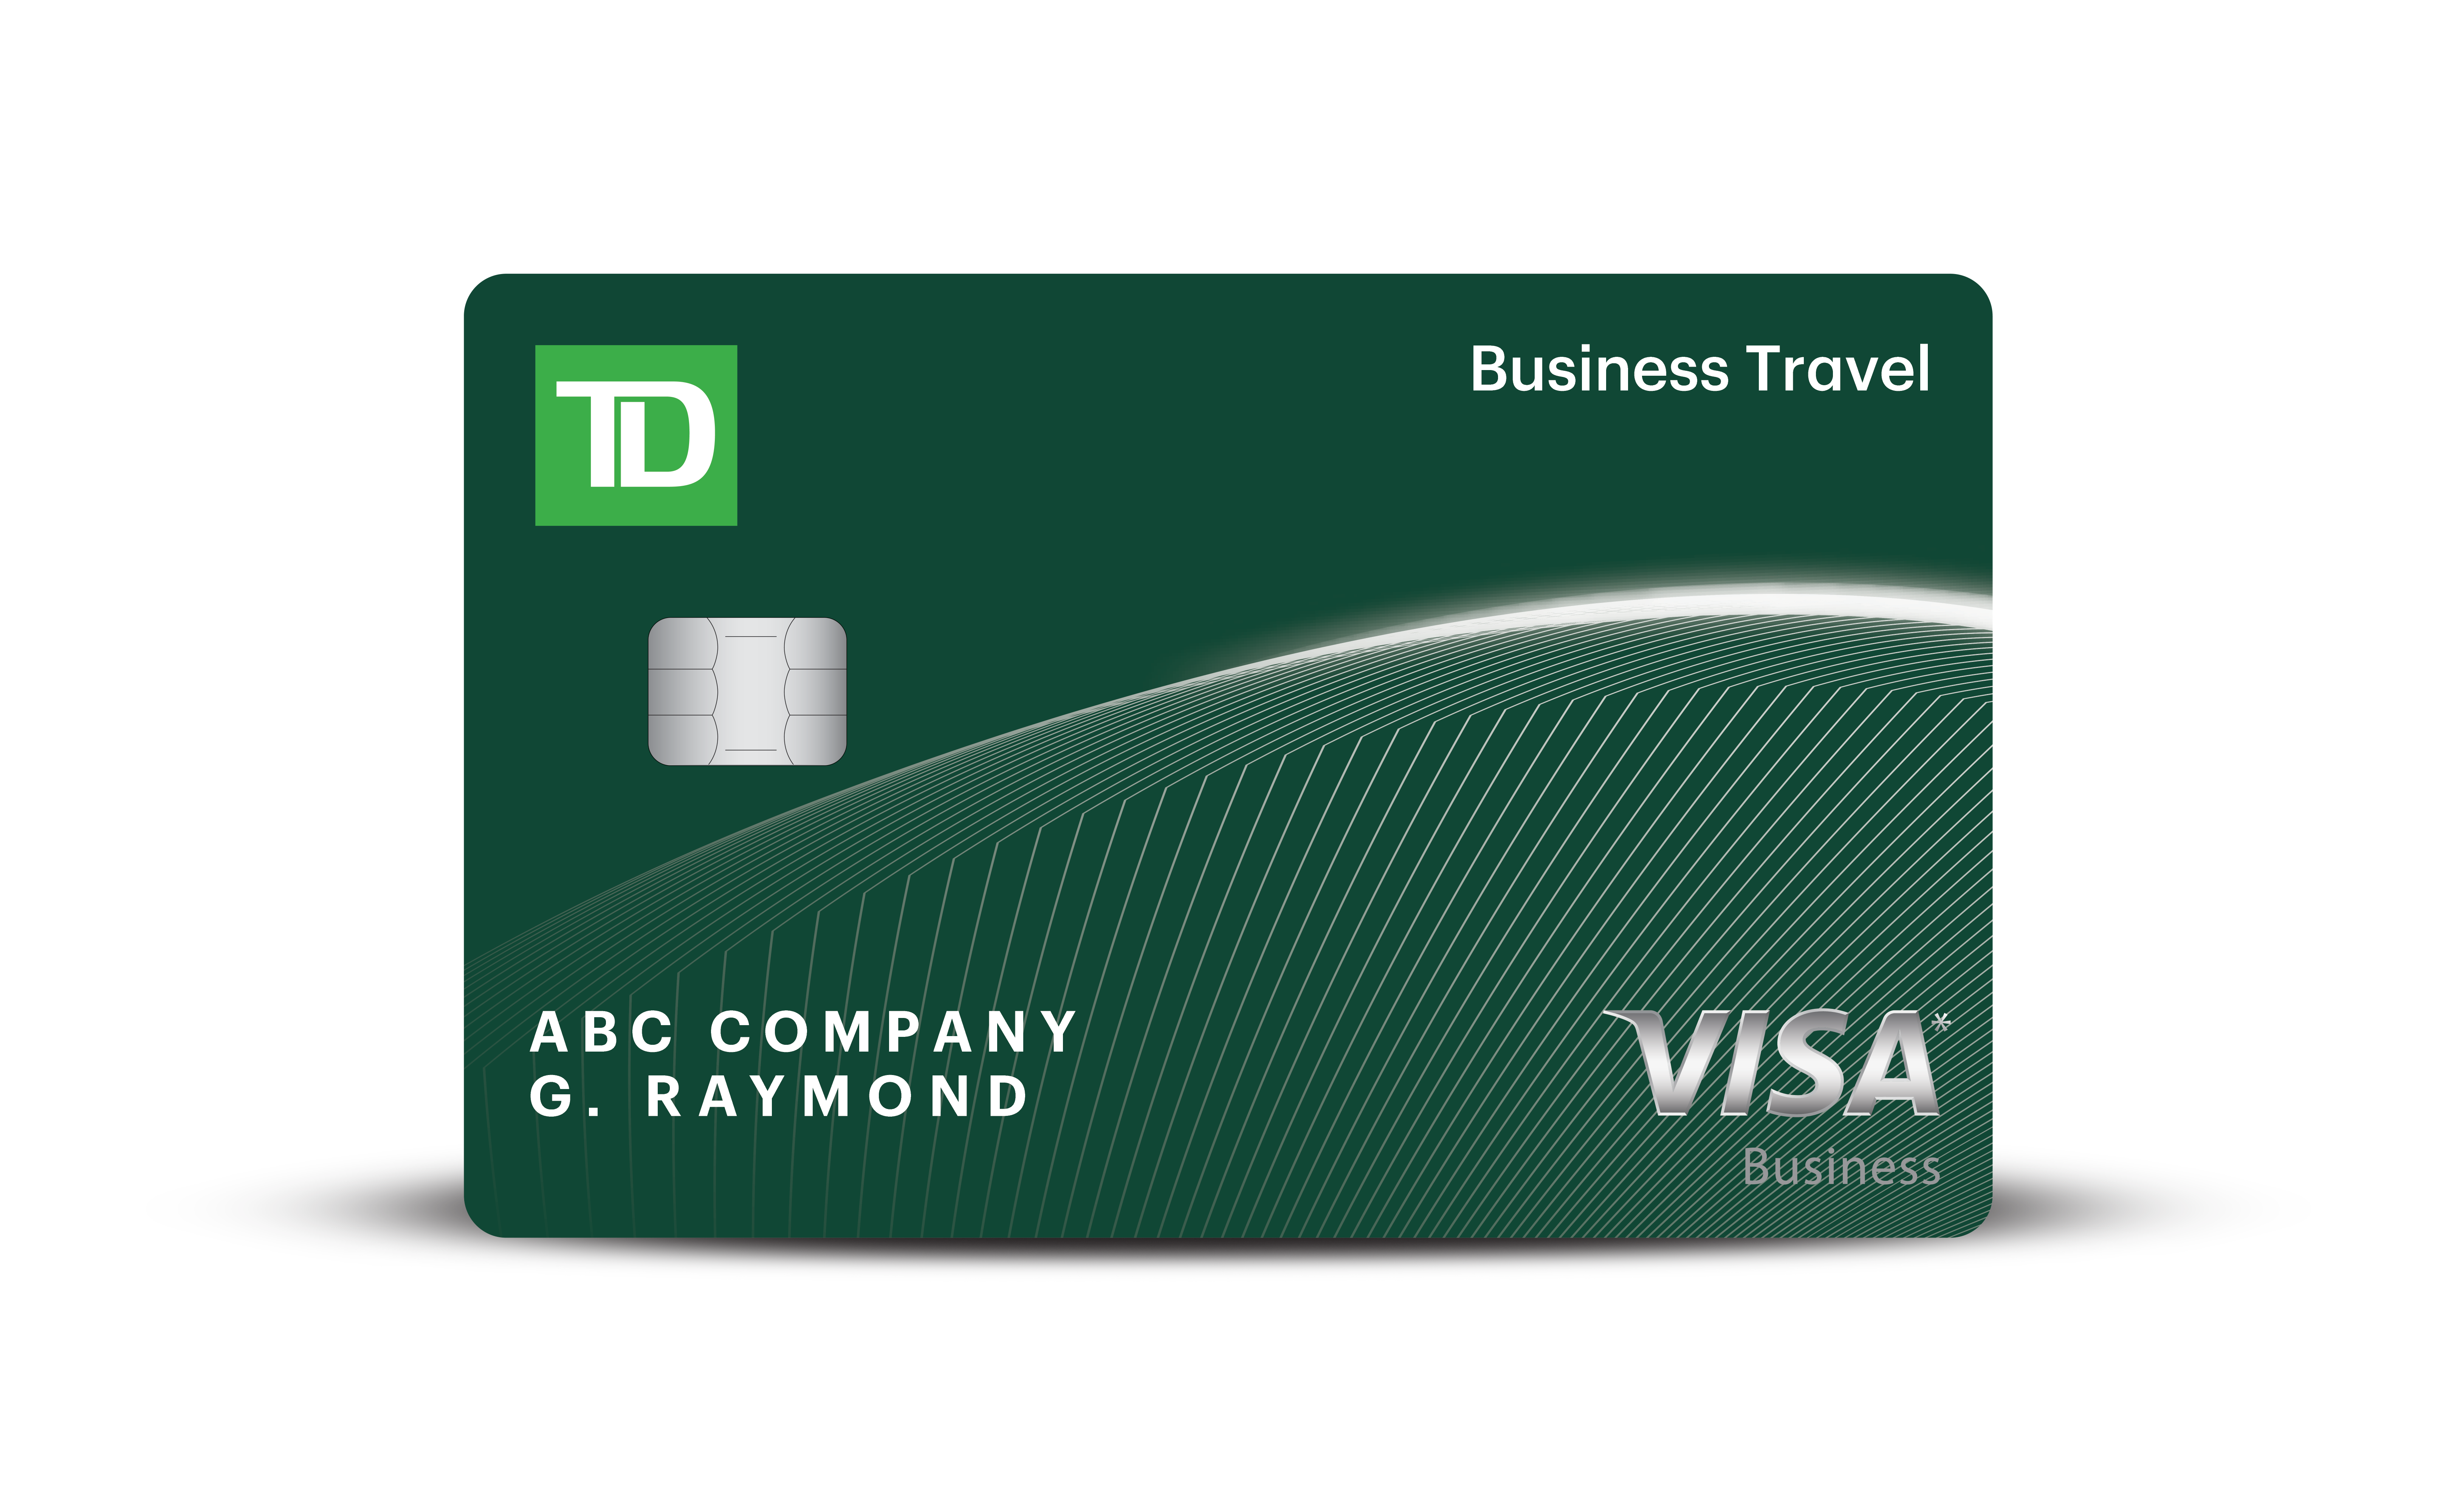 td business travel visa medical insurance